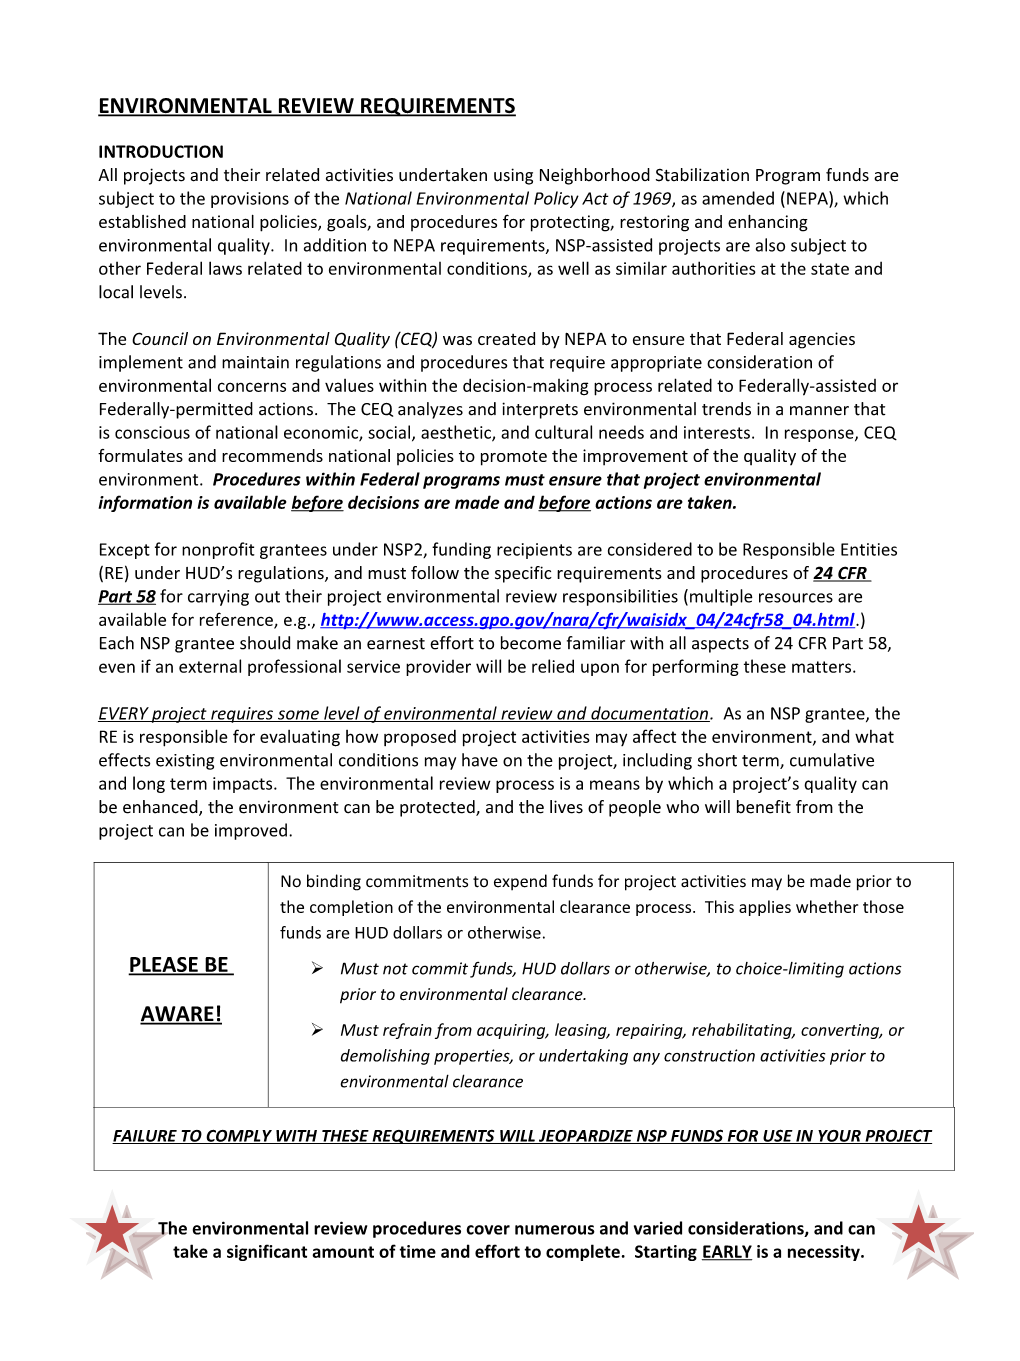 NEPA Environmental Review Checklist For NSP Grantees